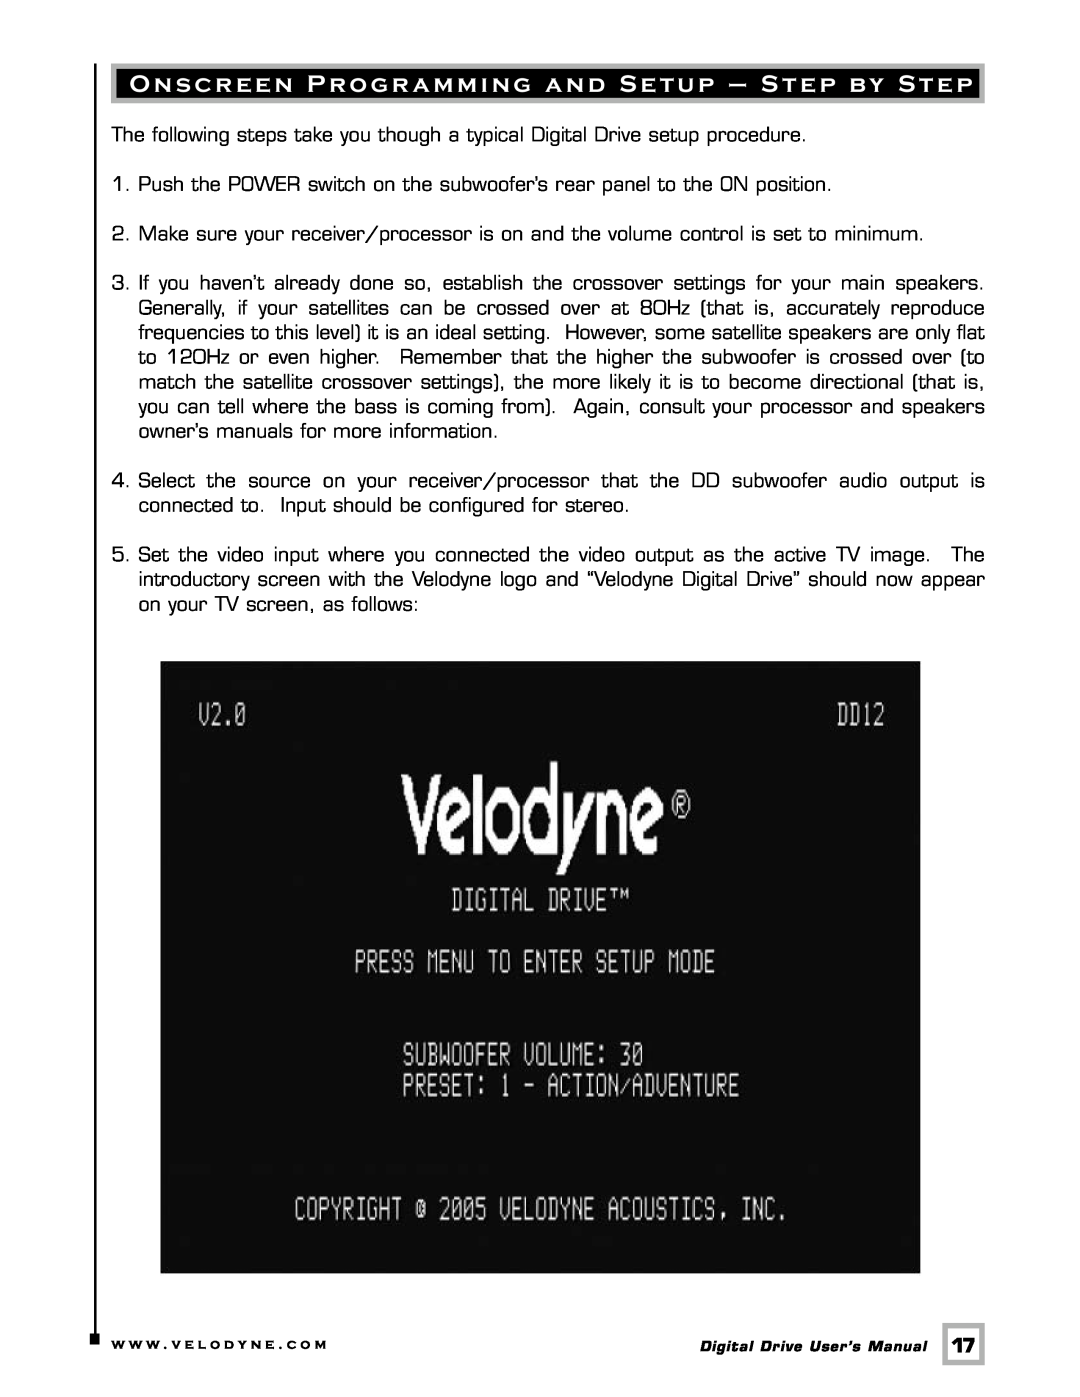 Velodyne Acoustics Digital Drive user manual Onscreen Programming and Setup - Step by Step 